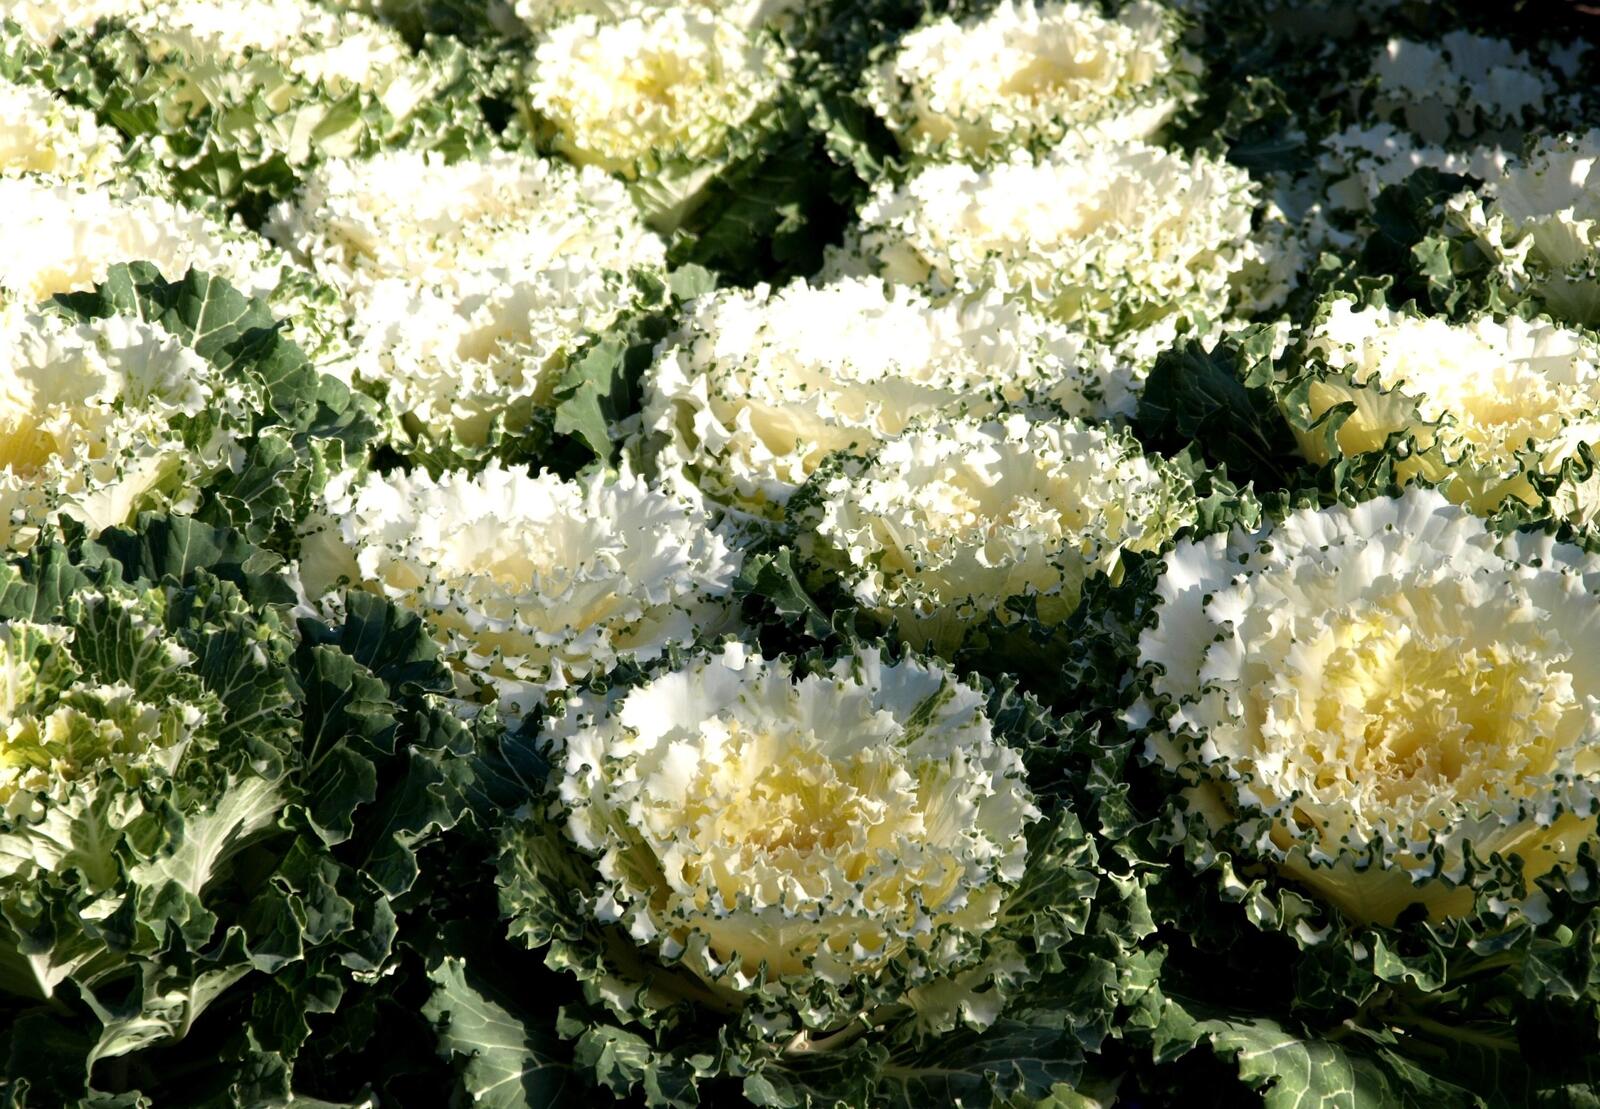 Wallpapers flowerbed greens ornamental cabbage on the desktop